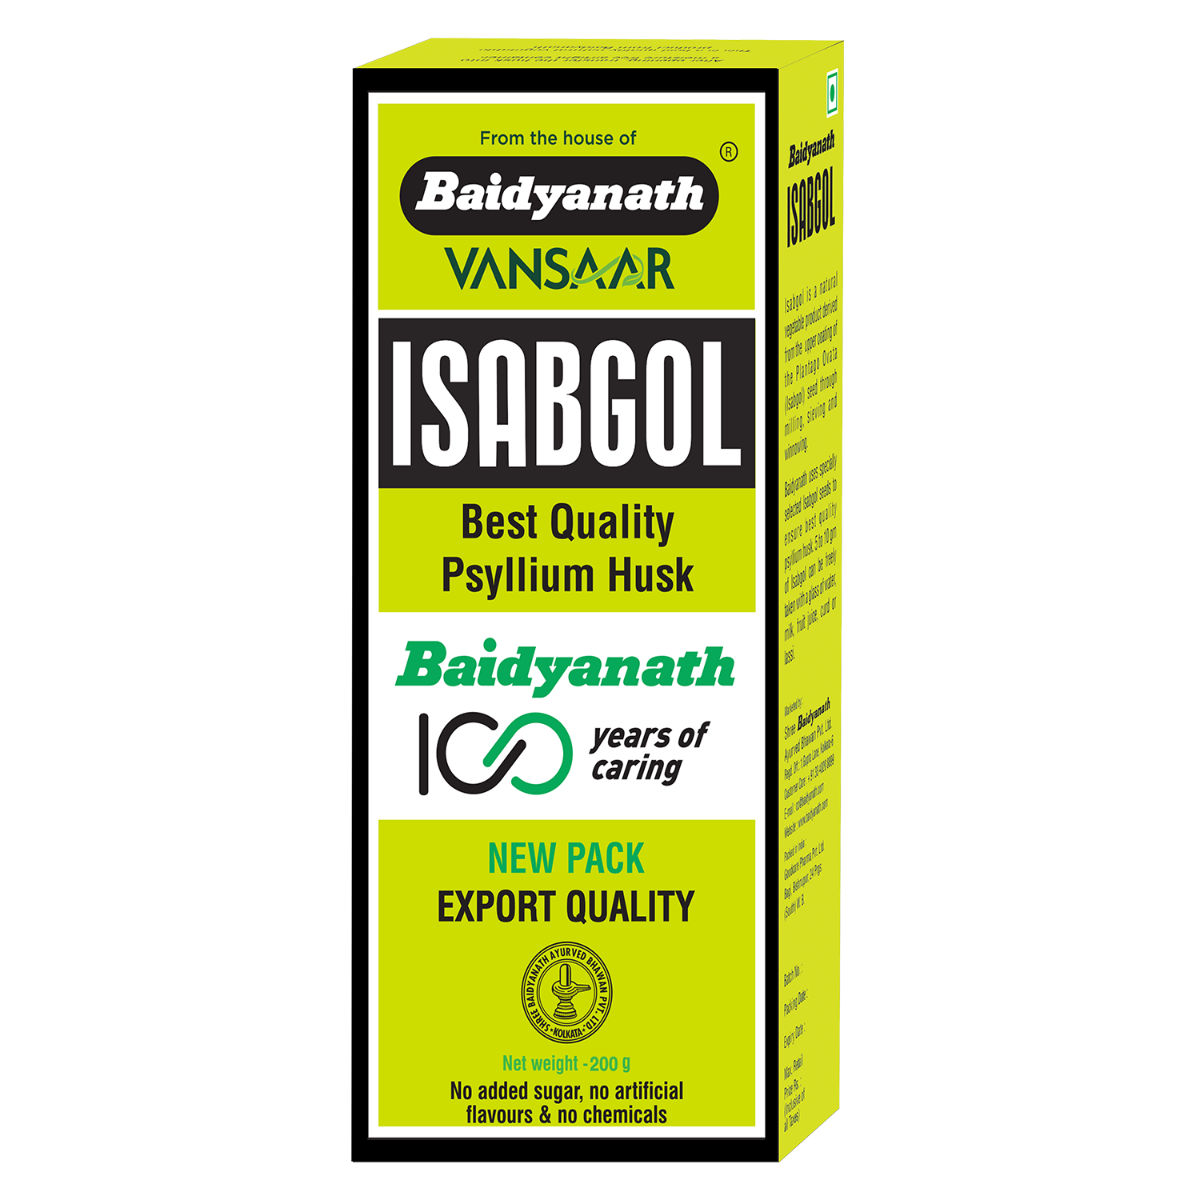 Baidyanath Vansaar Isabgol Powder, 200 gm, Pack of 1 